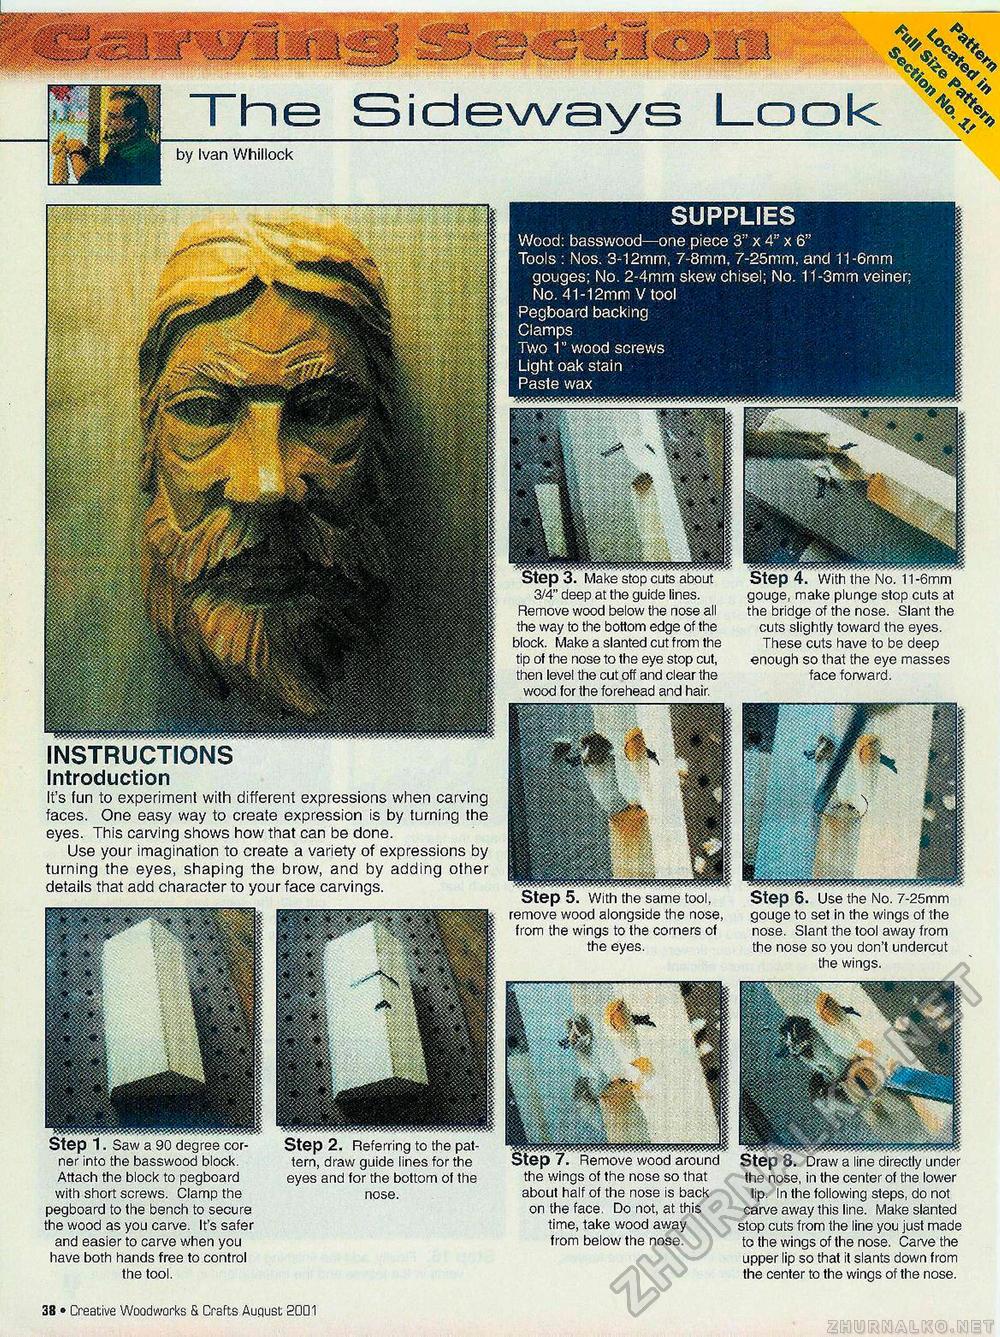 Creative Woodworks & crafts 2001-08,  38